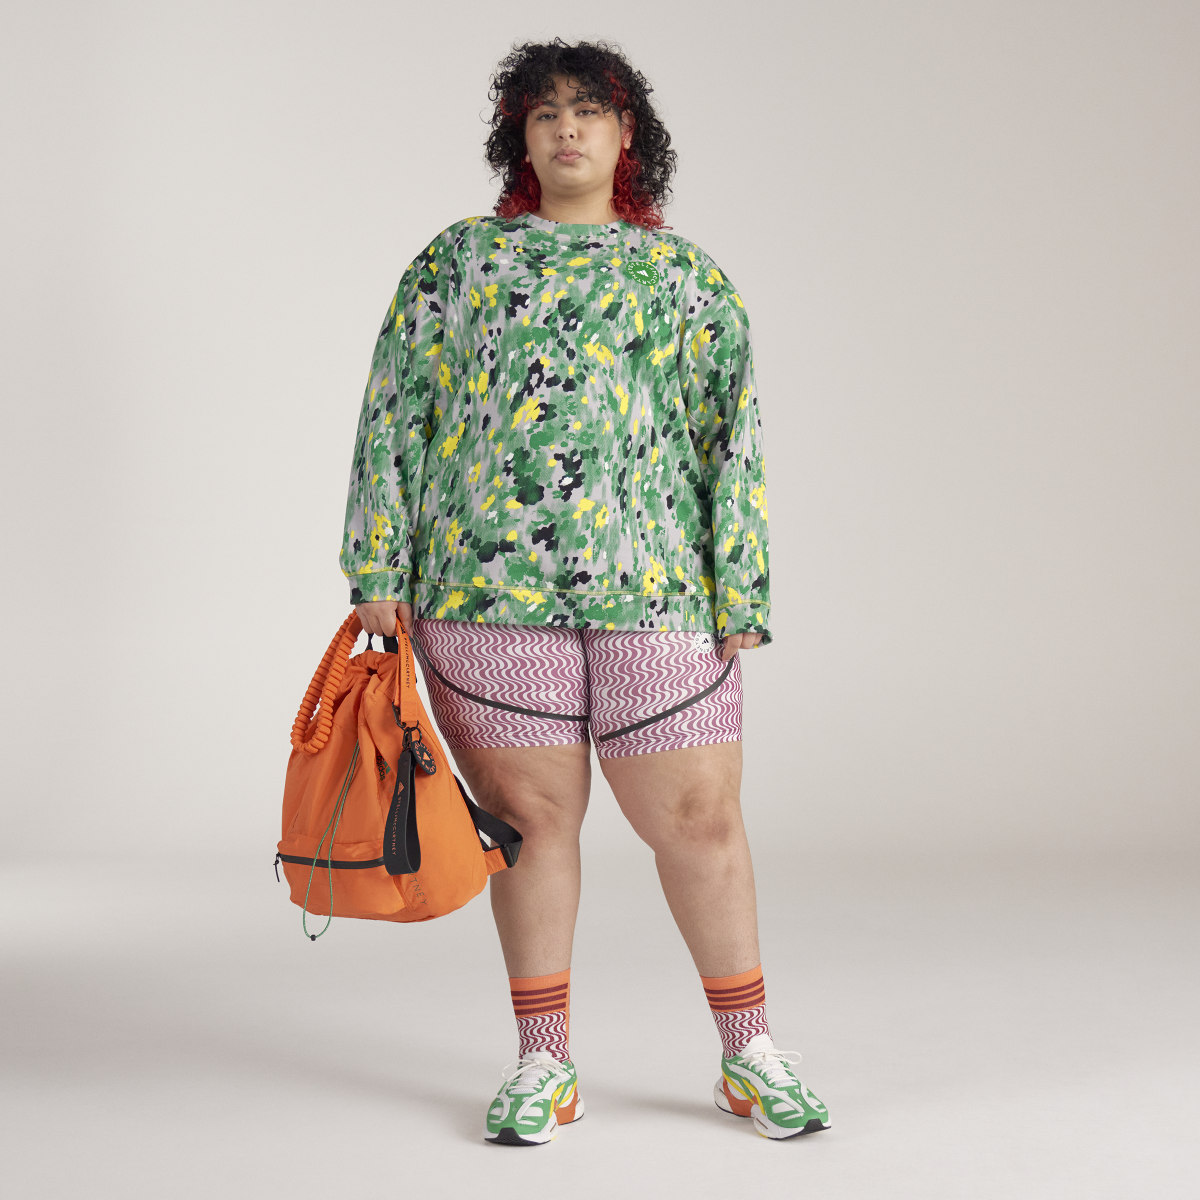 Adidas by Stella McCartney Floral Print Sweatshirt - Plus Size. 8